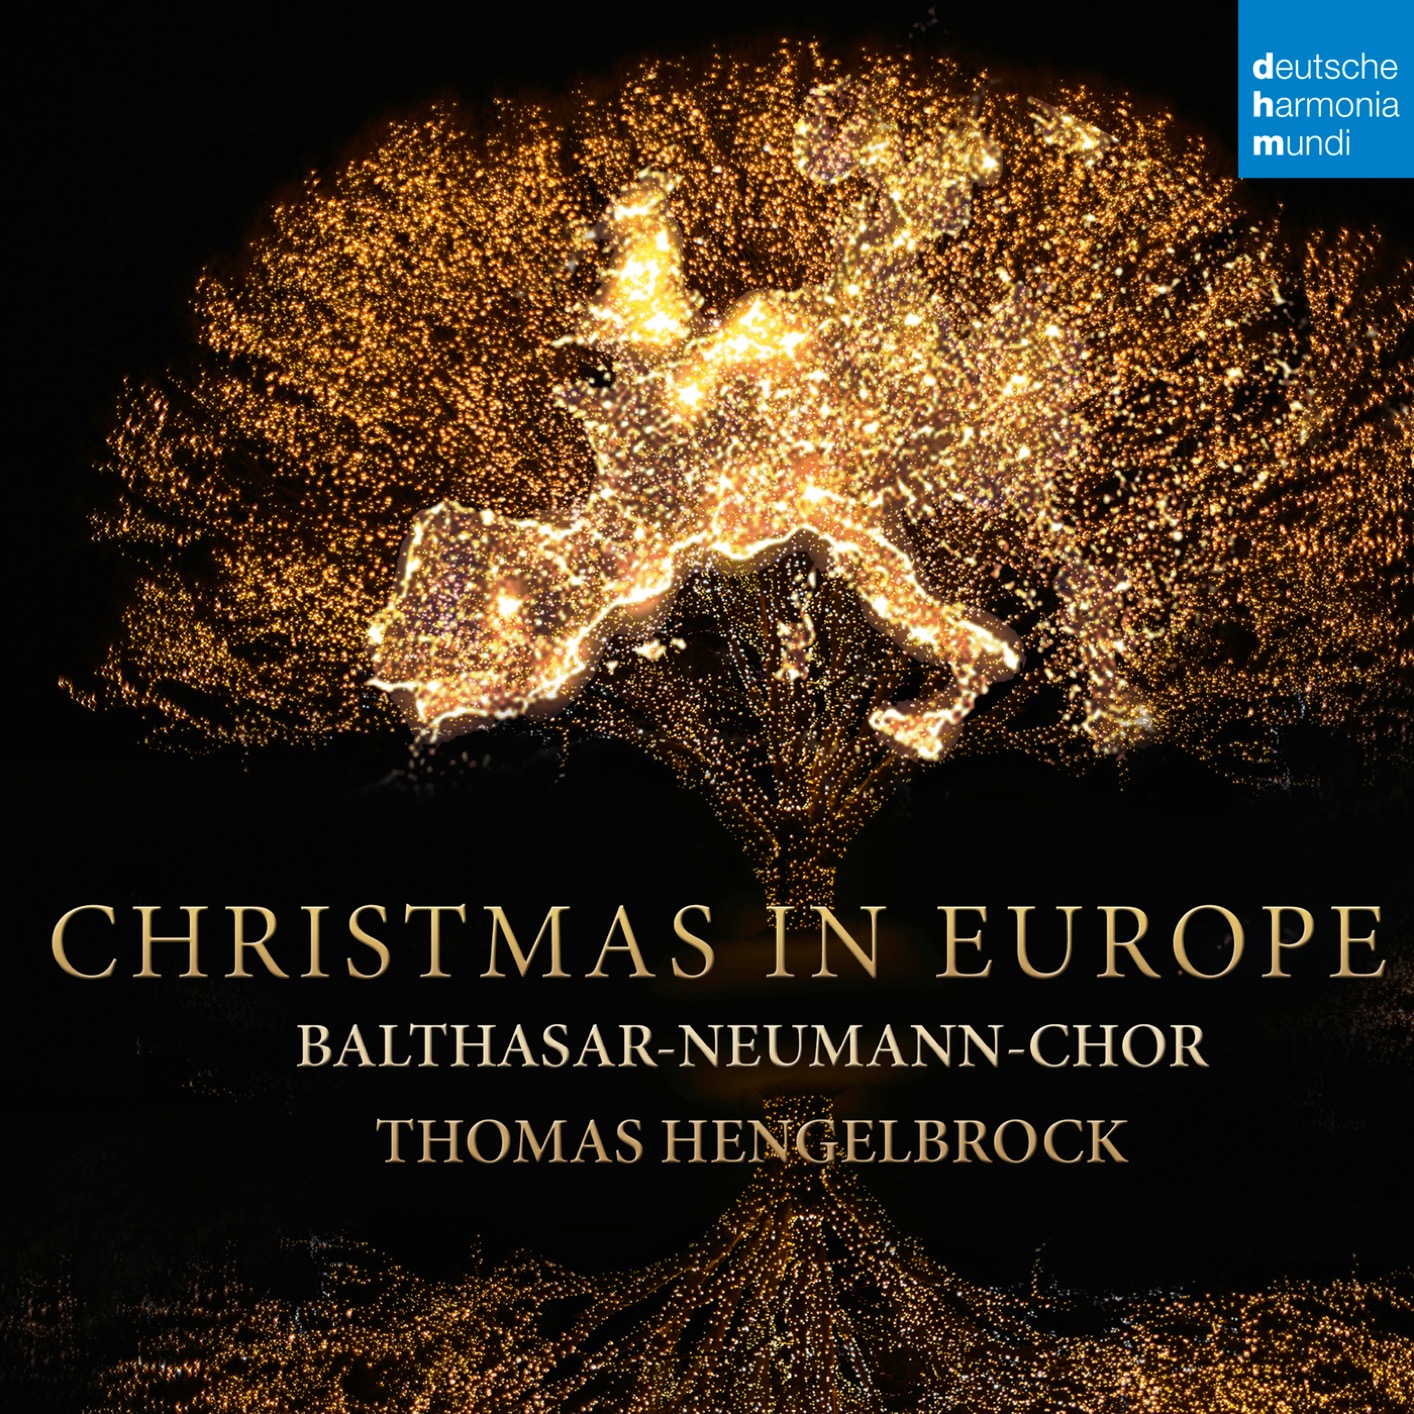 Thomas Hengelbrock & Balthasar-Neumann-Chor – Christmas in Europe (2020) [FLAC 24bit/96kHz]